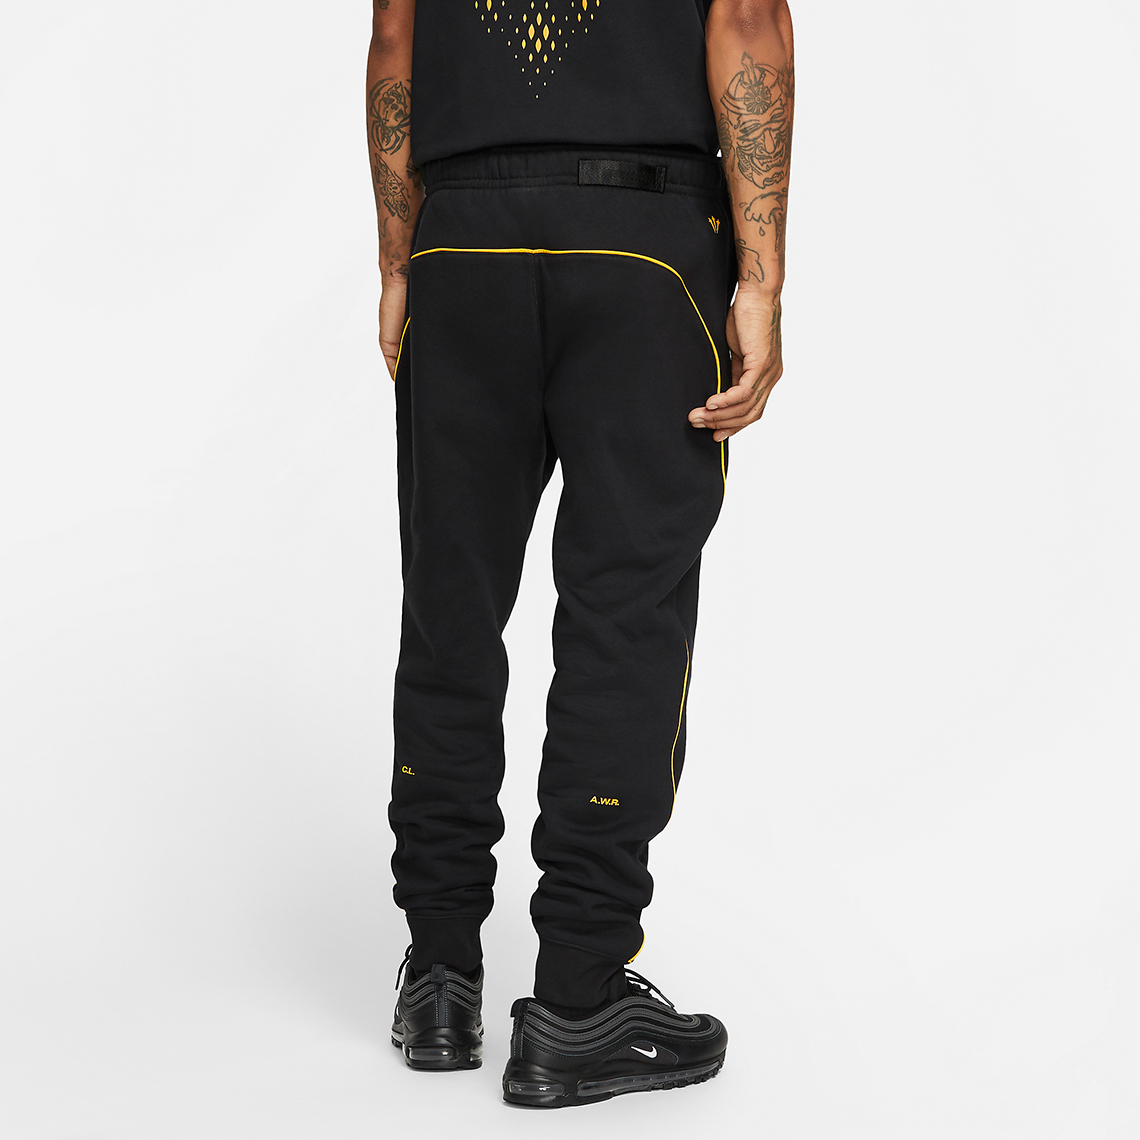 Drake Nike Nocta Pants Black Da3935 010 2